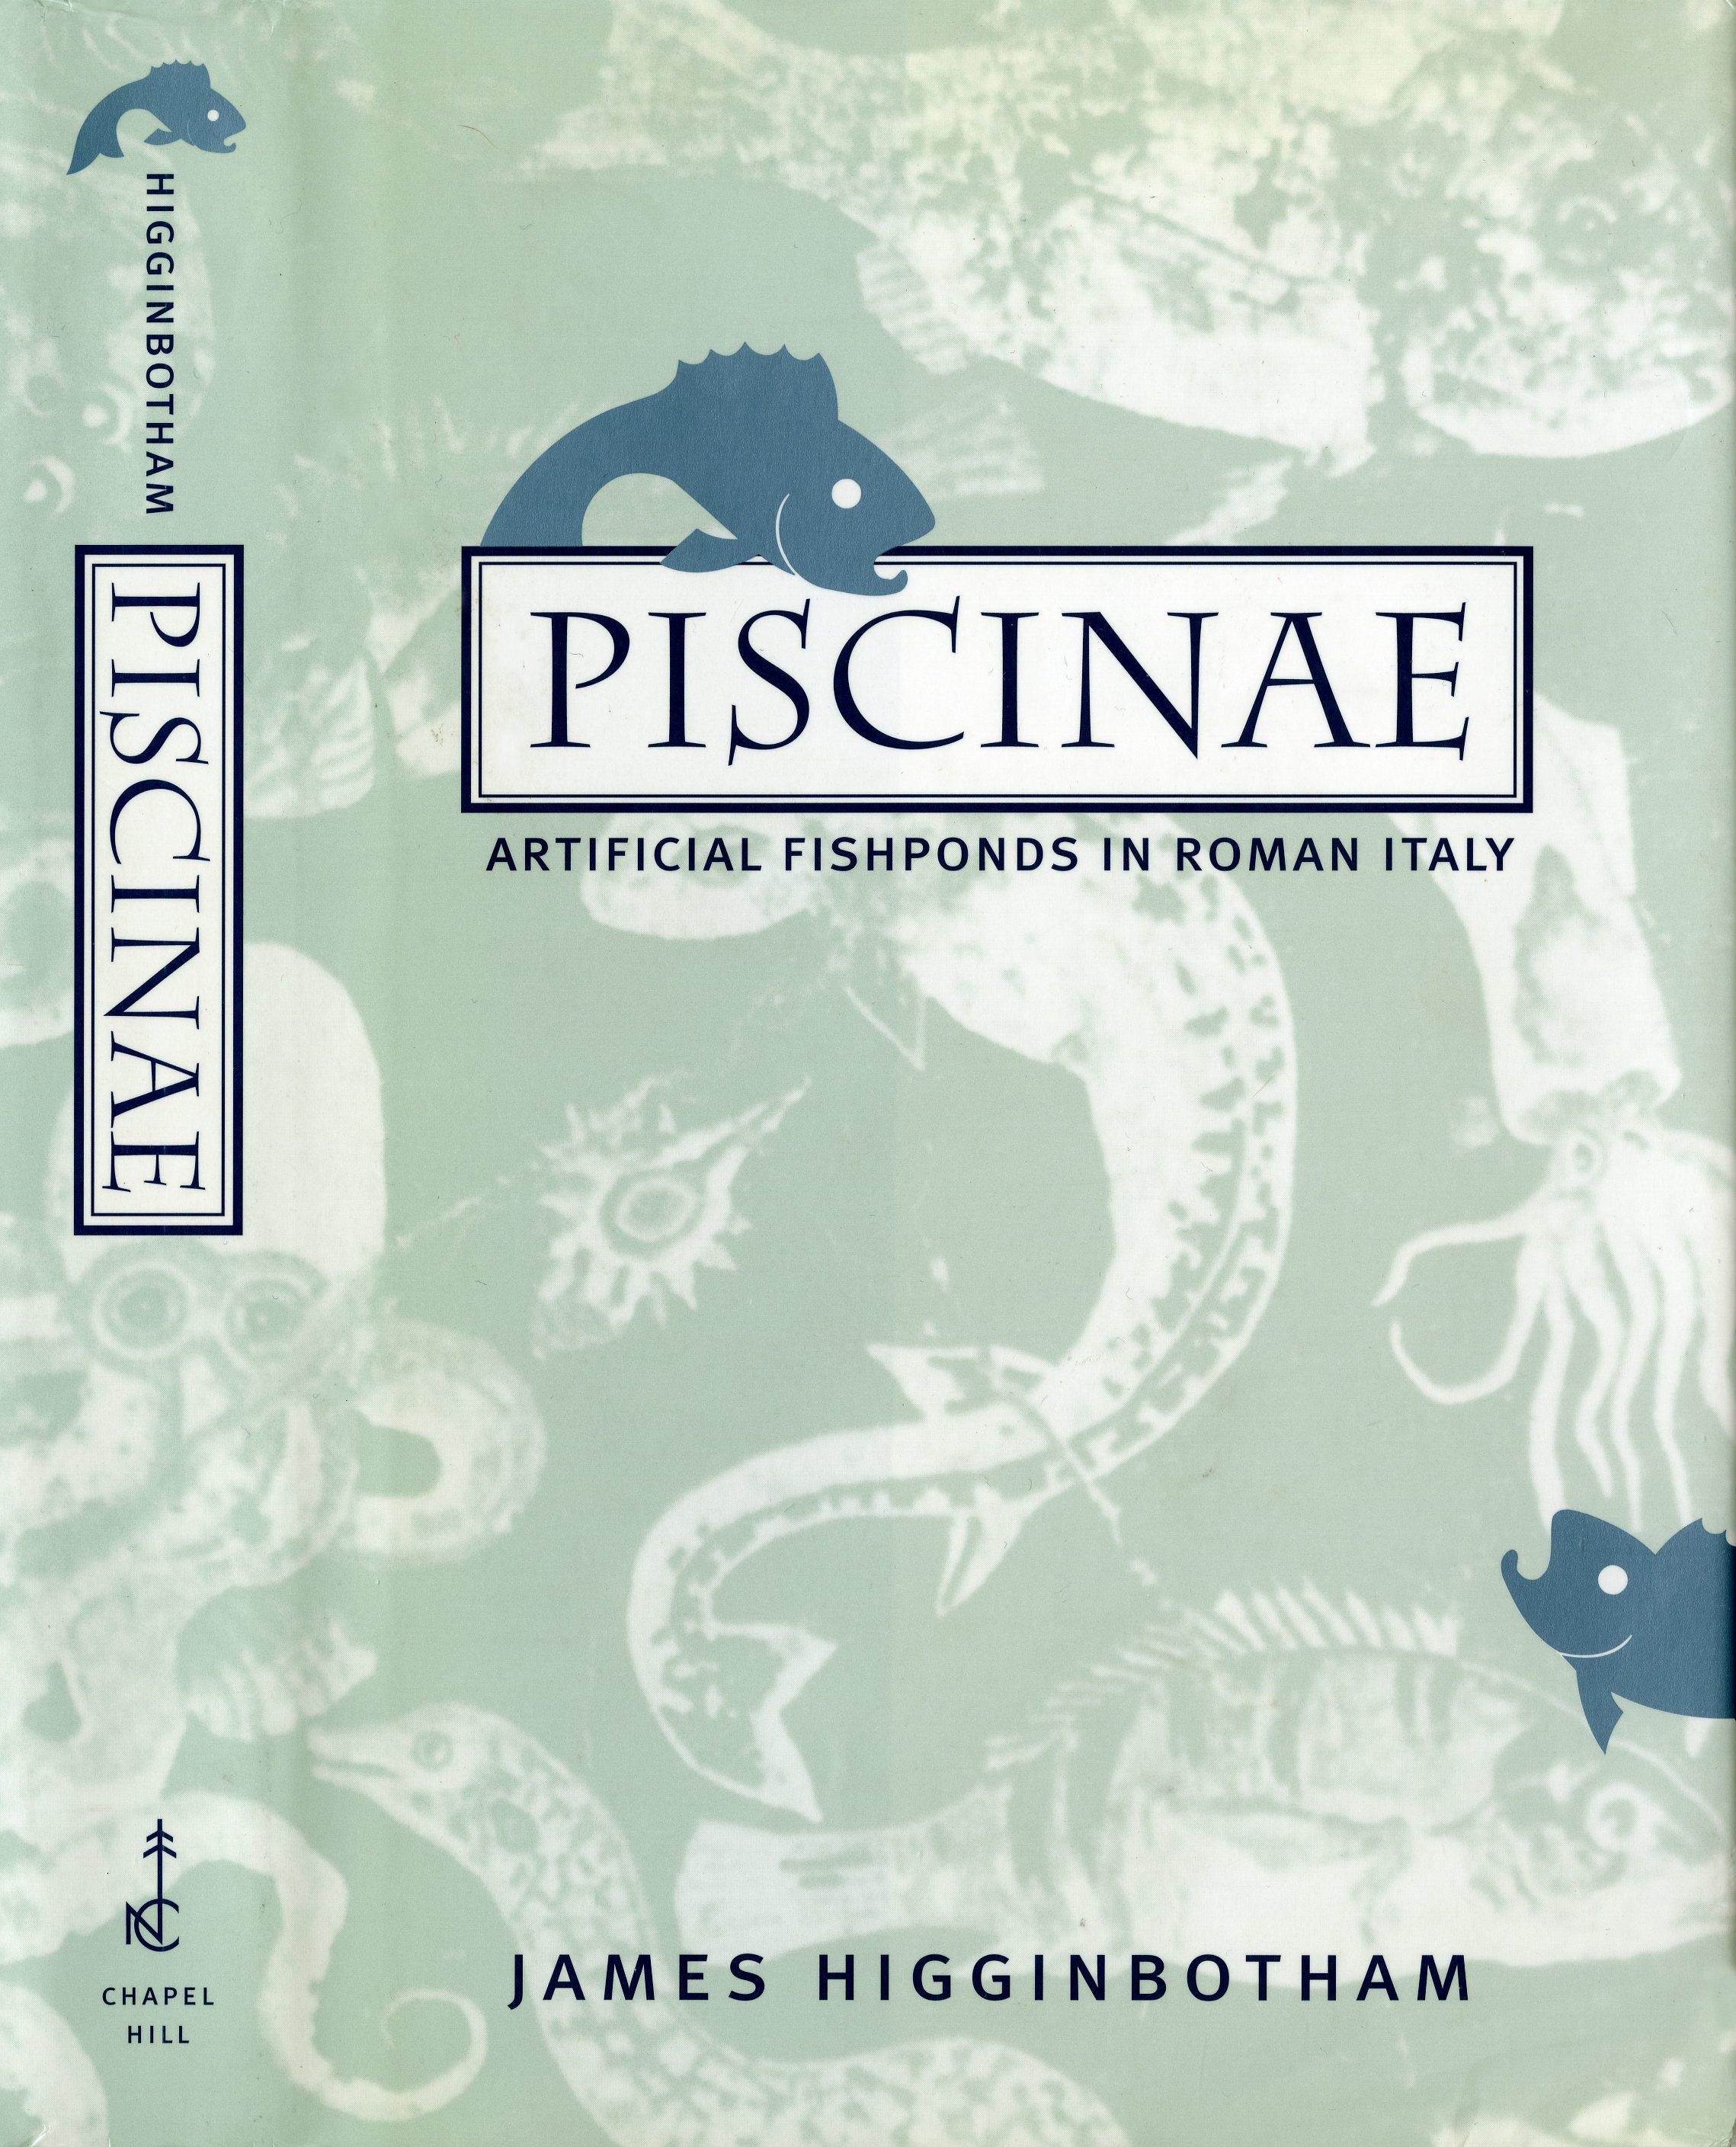 Piscinae Book Cover Image